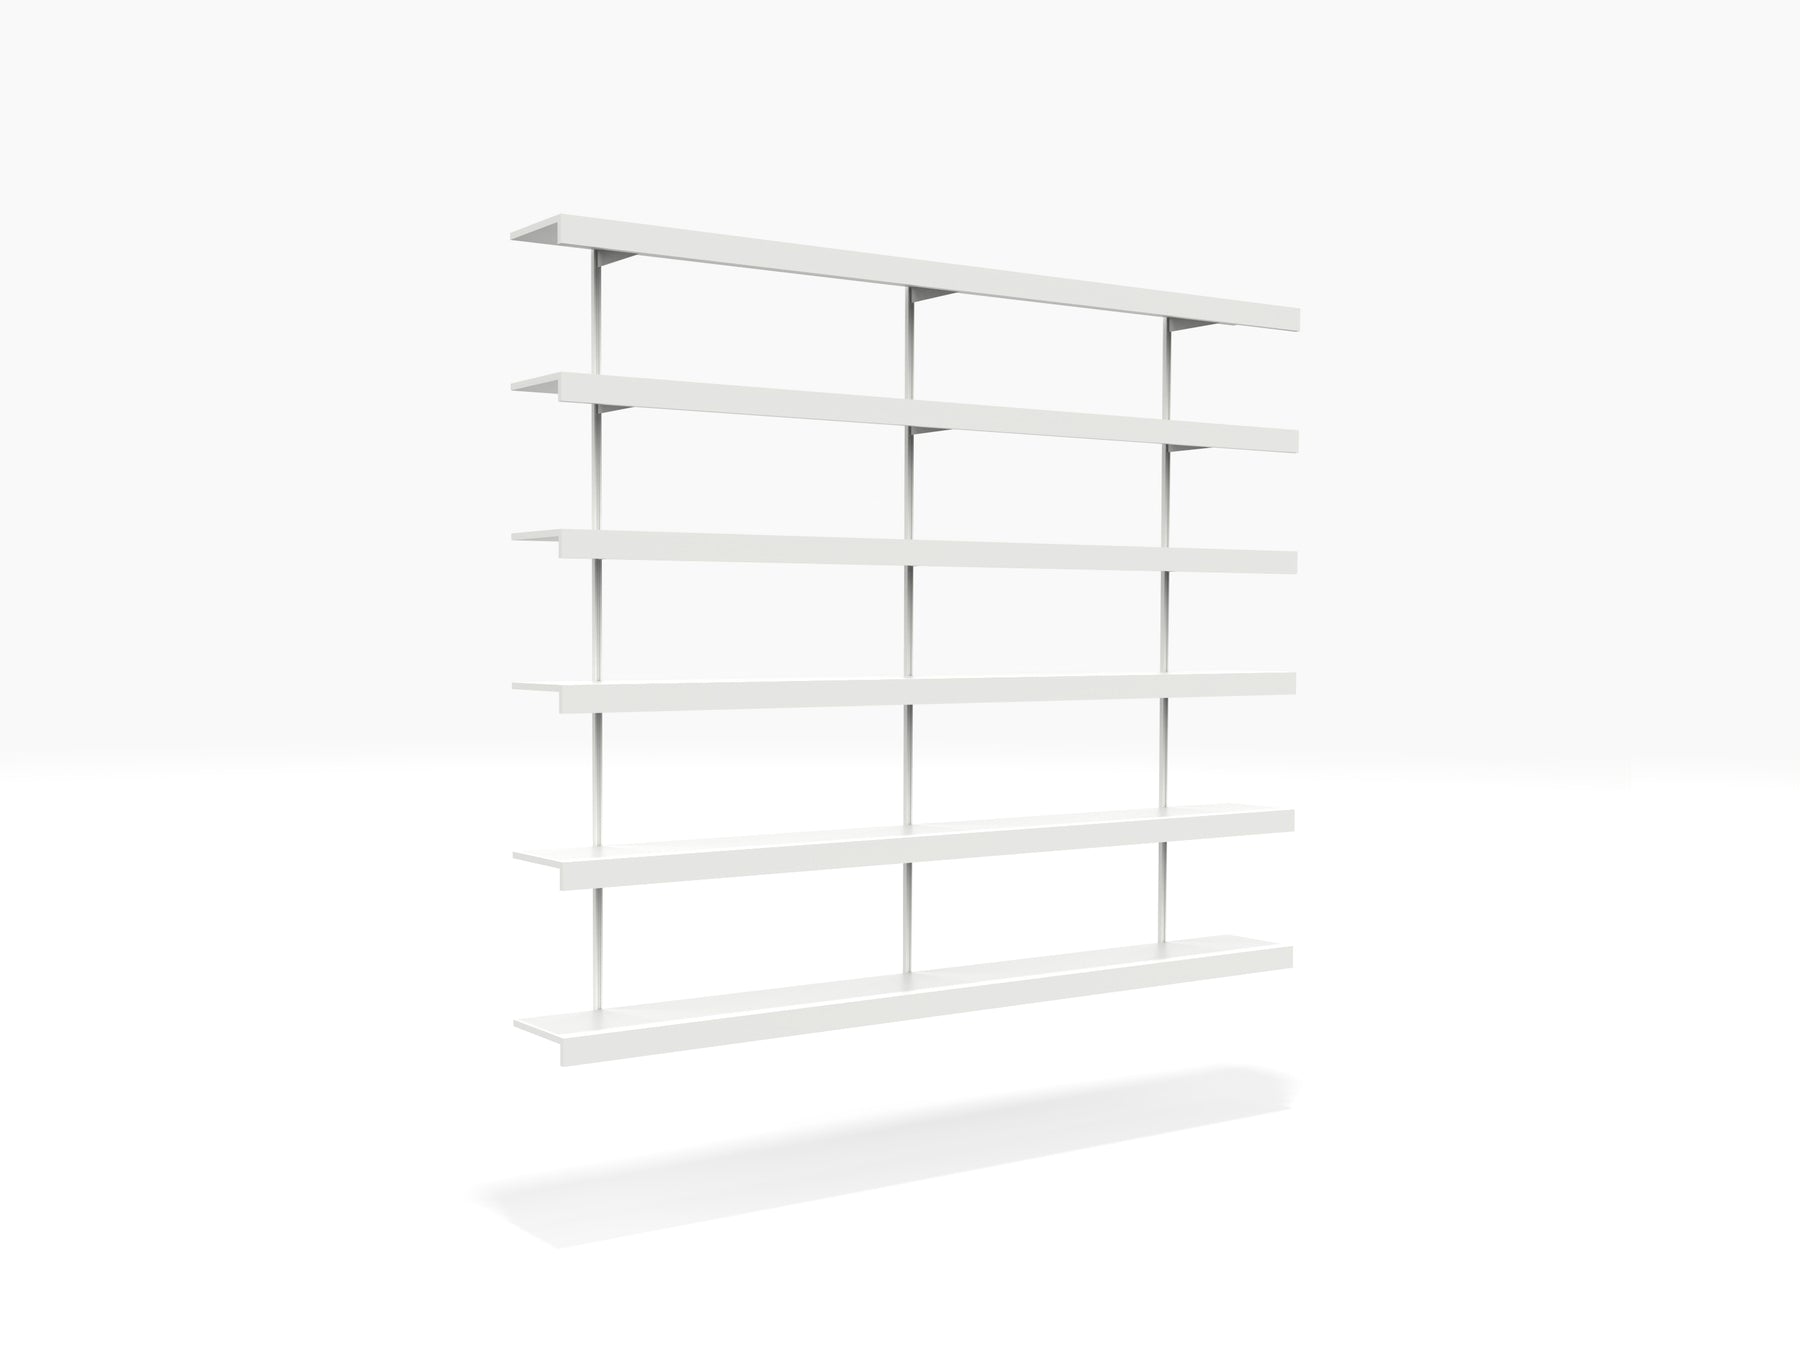 Long white wall shelves made from aluminium